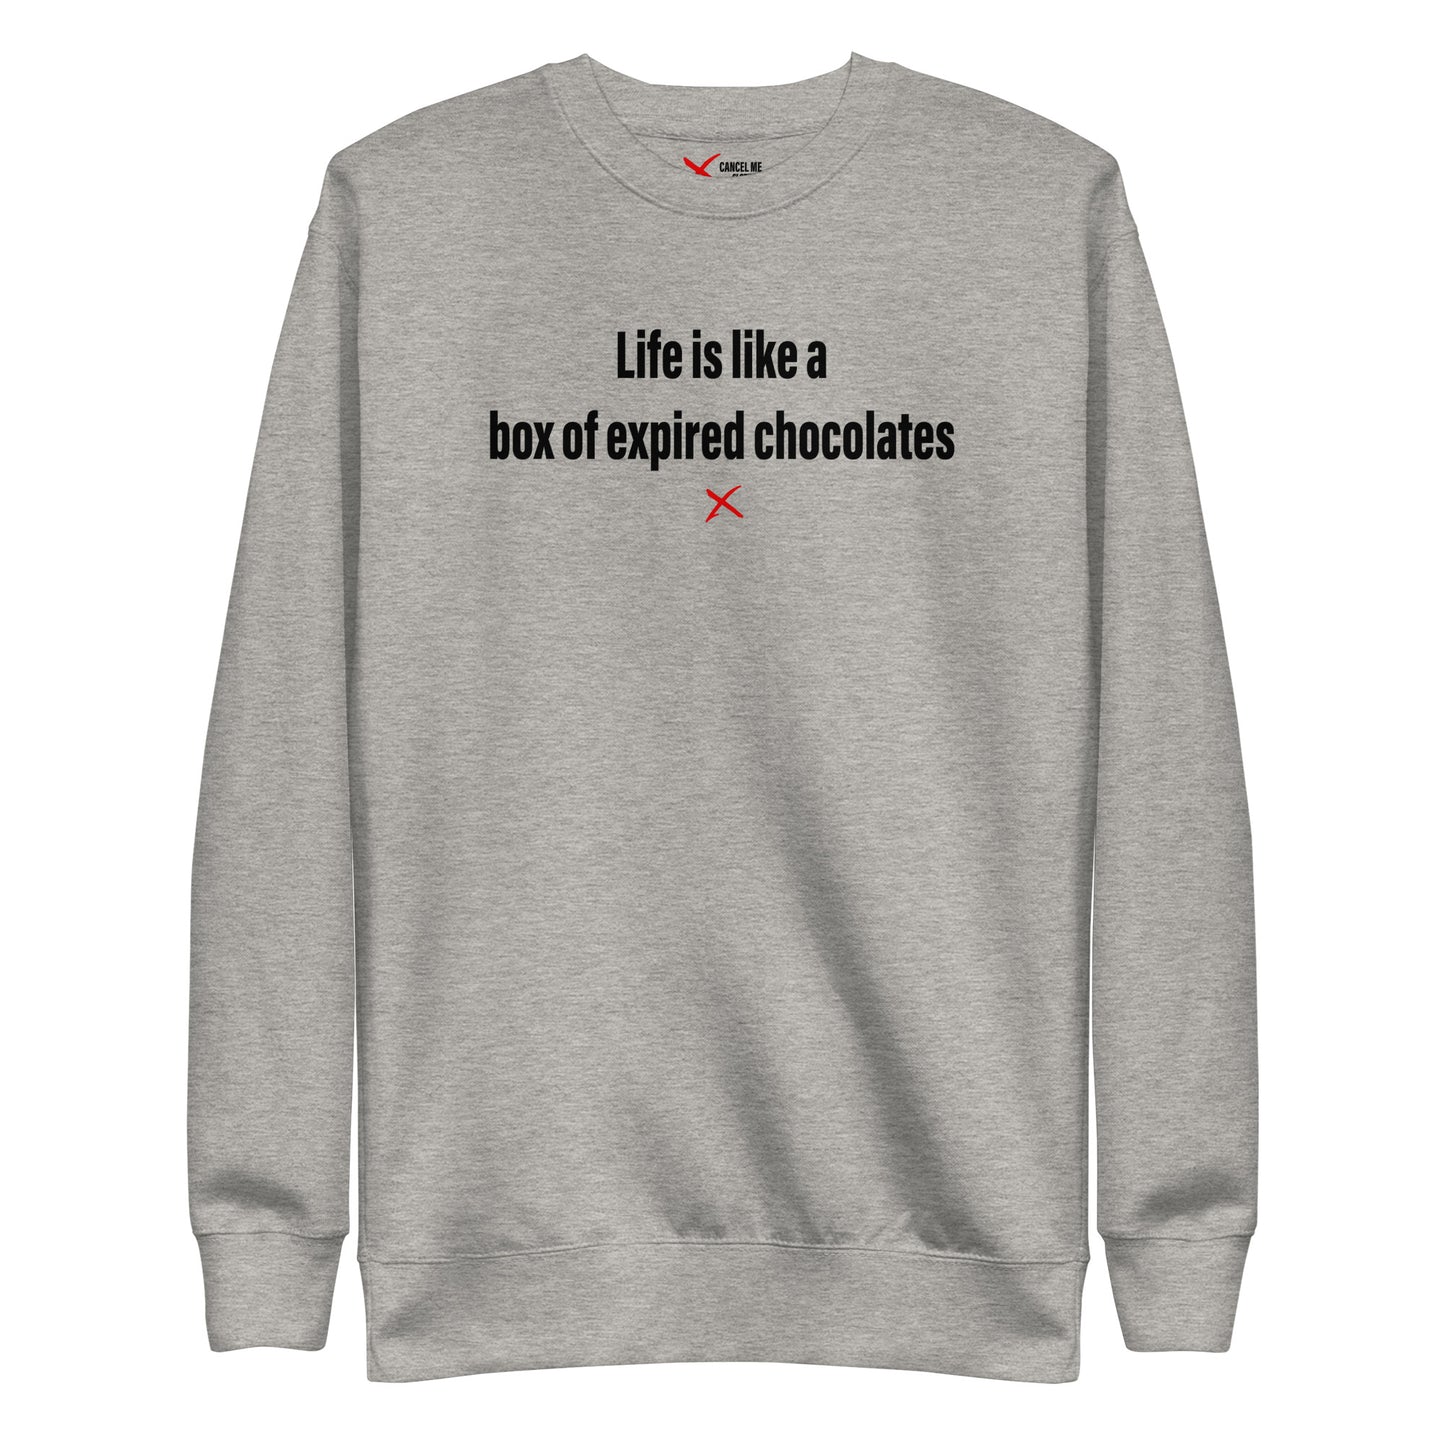 Life is like a box of expired chocolates - Sweatshirt